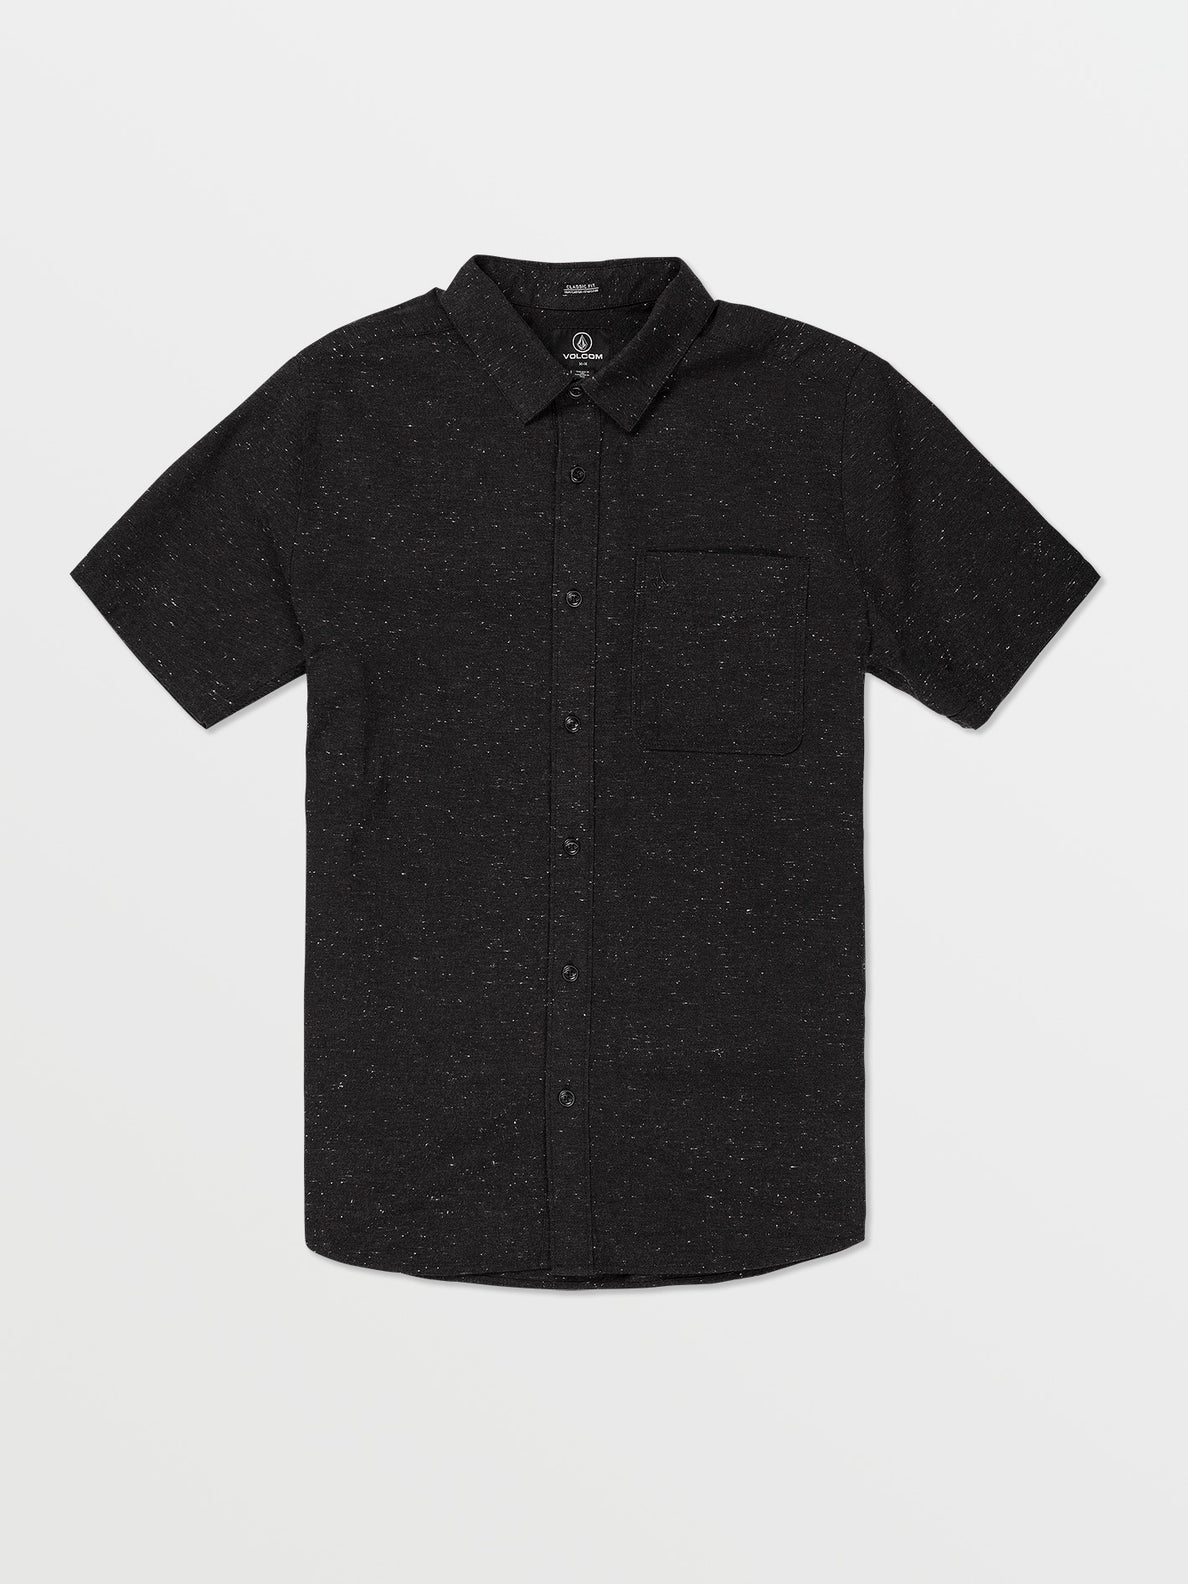 Date Knight Short Sleeve Shirt - Black